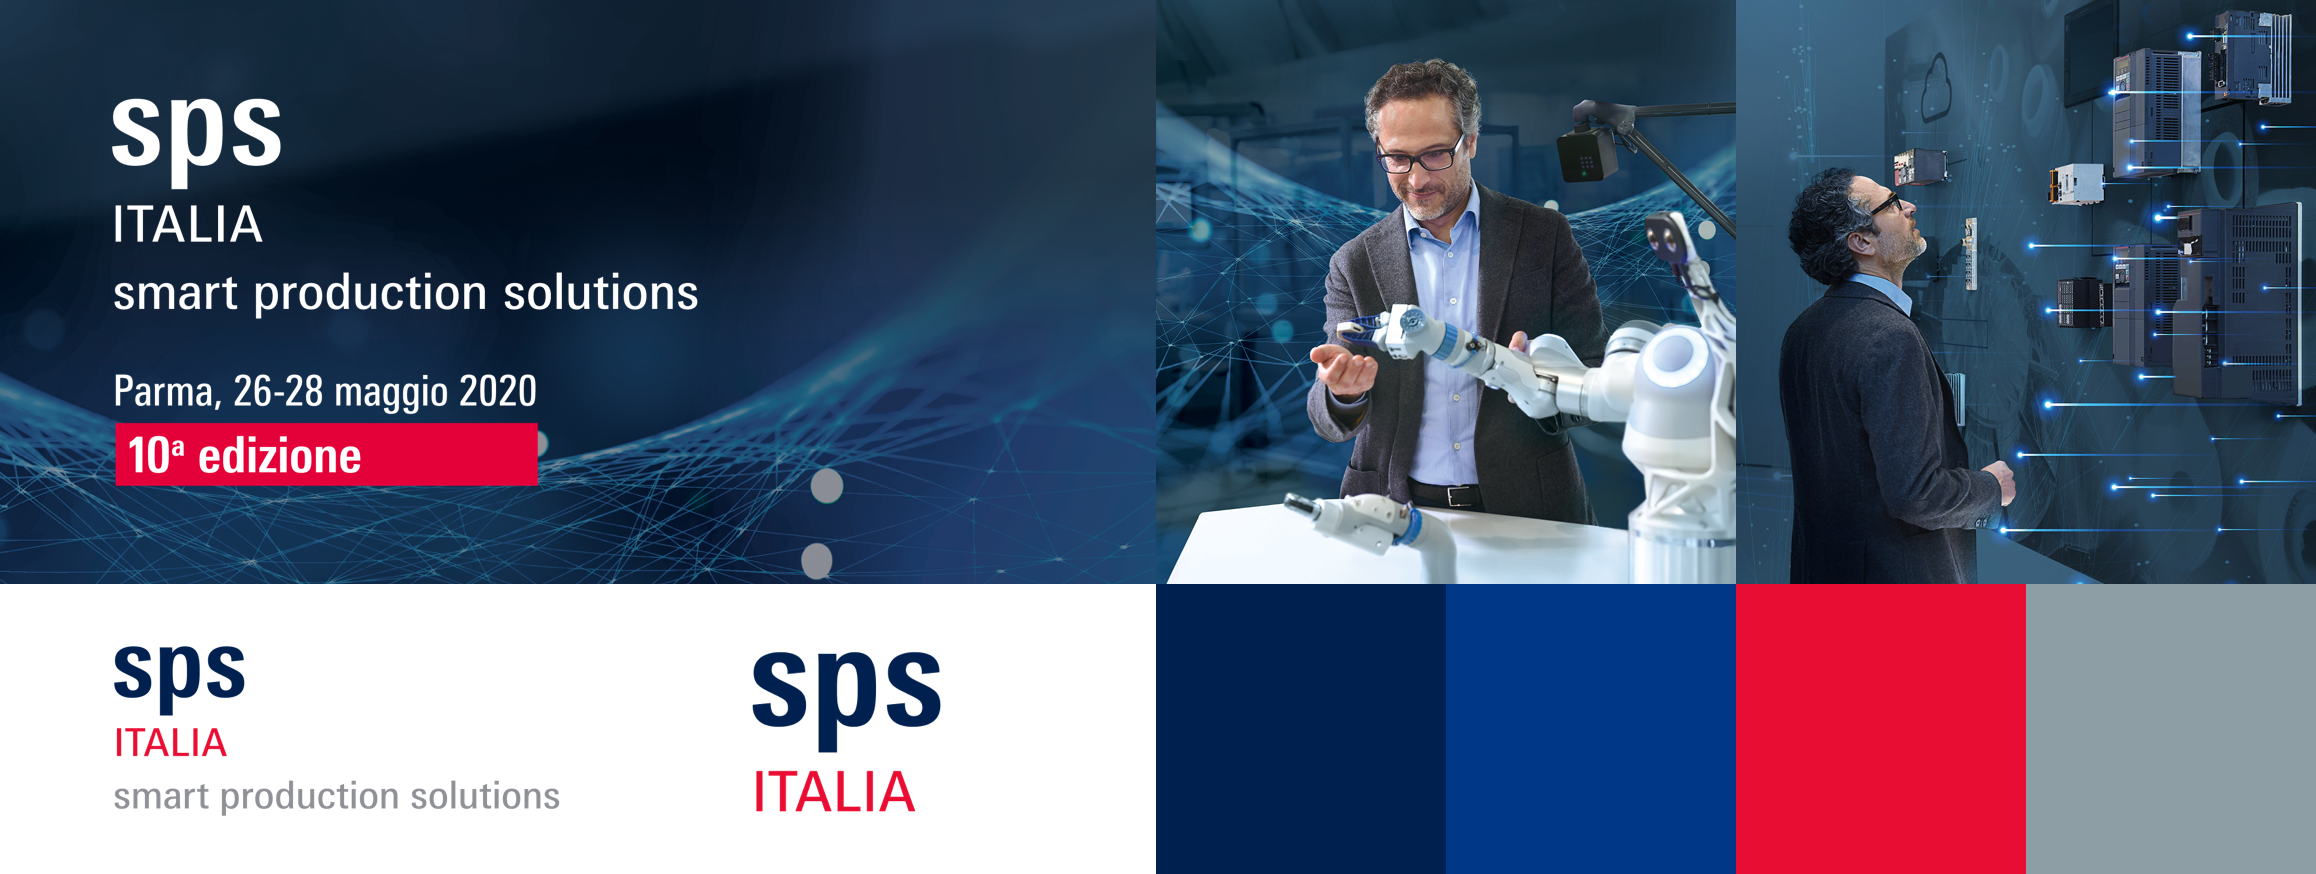 sps-italia-2020-brand@2x